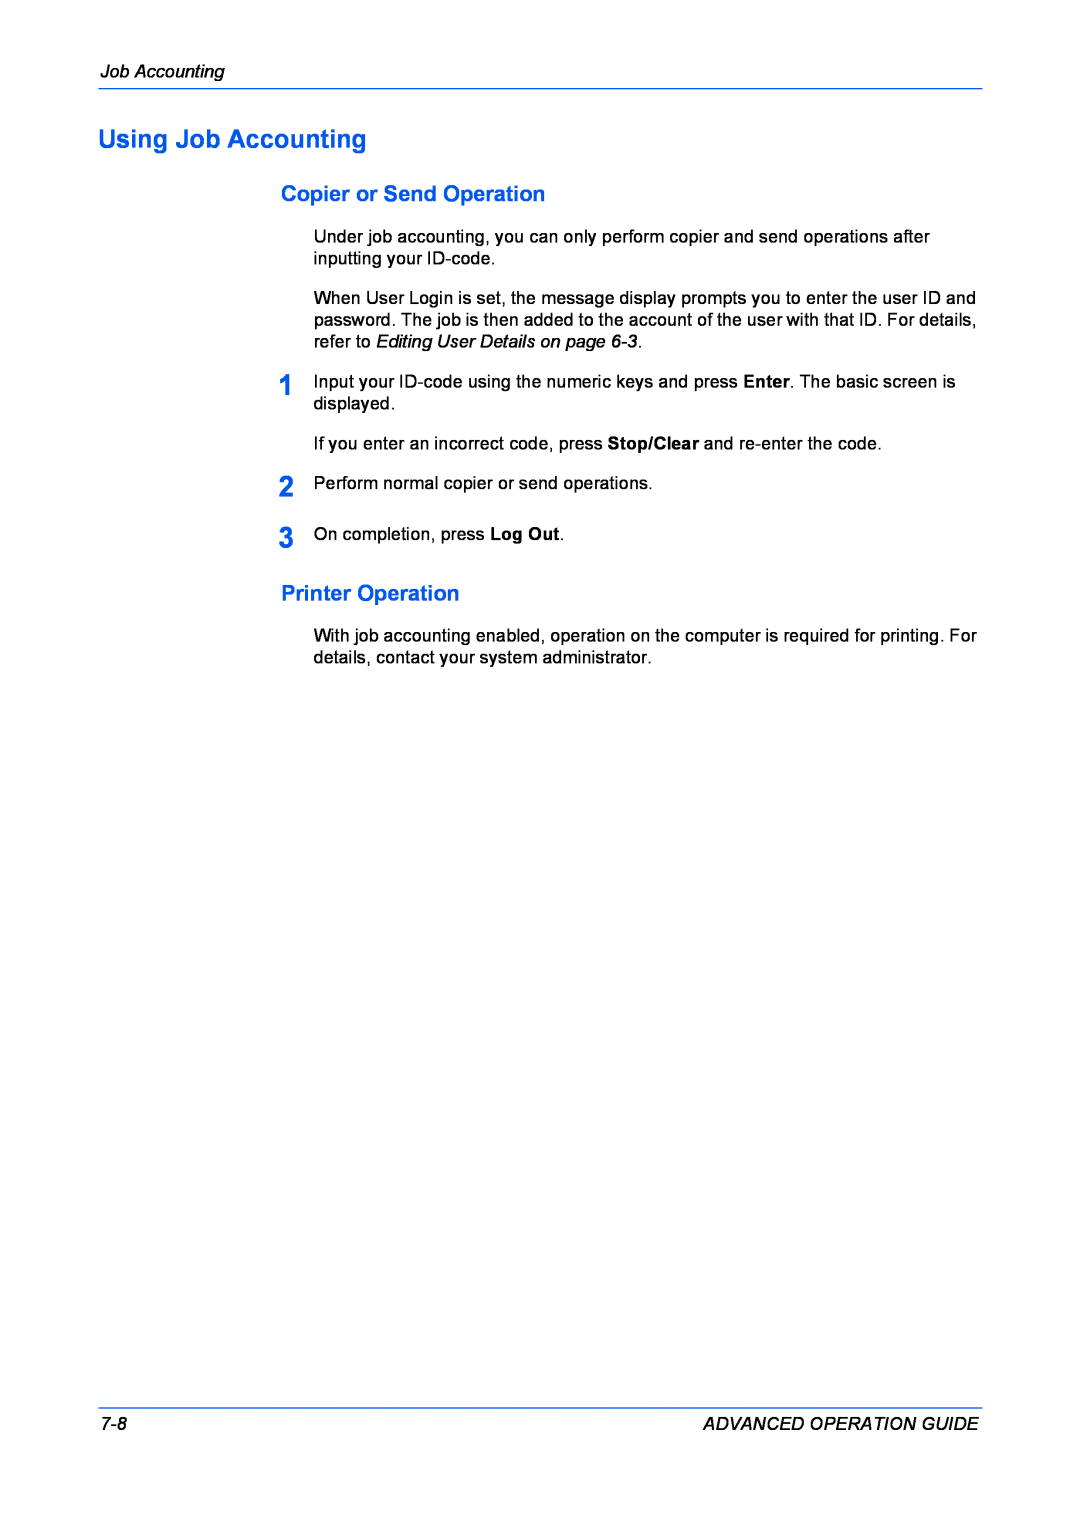 Kyocera KM-1820 manual Using Job Accounting, Copier or Send Operation, Printer Operation 